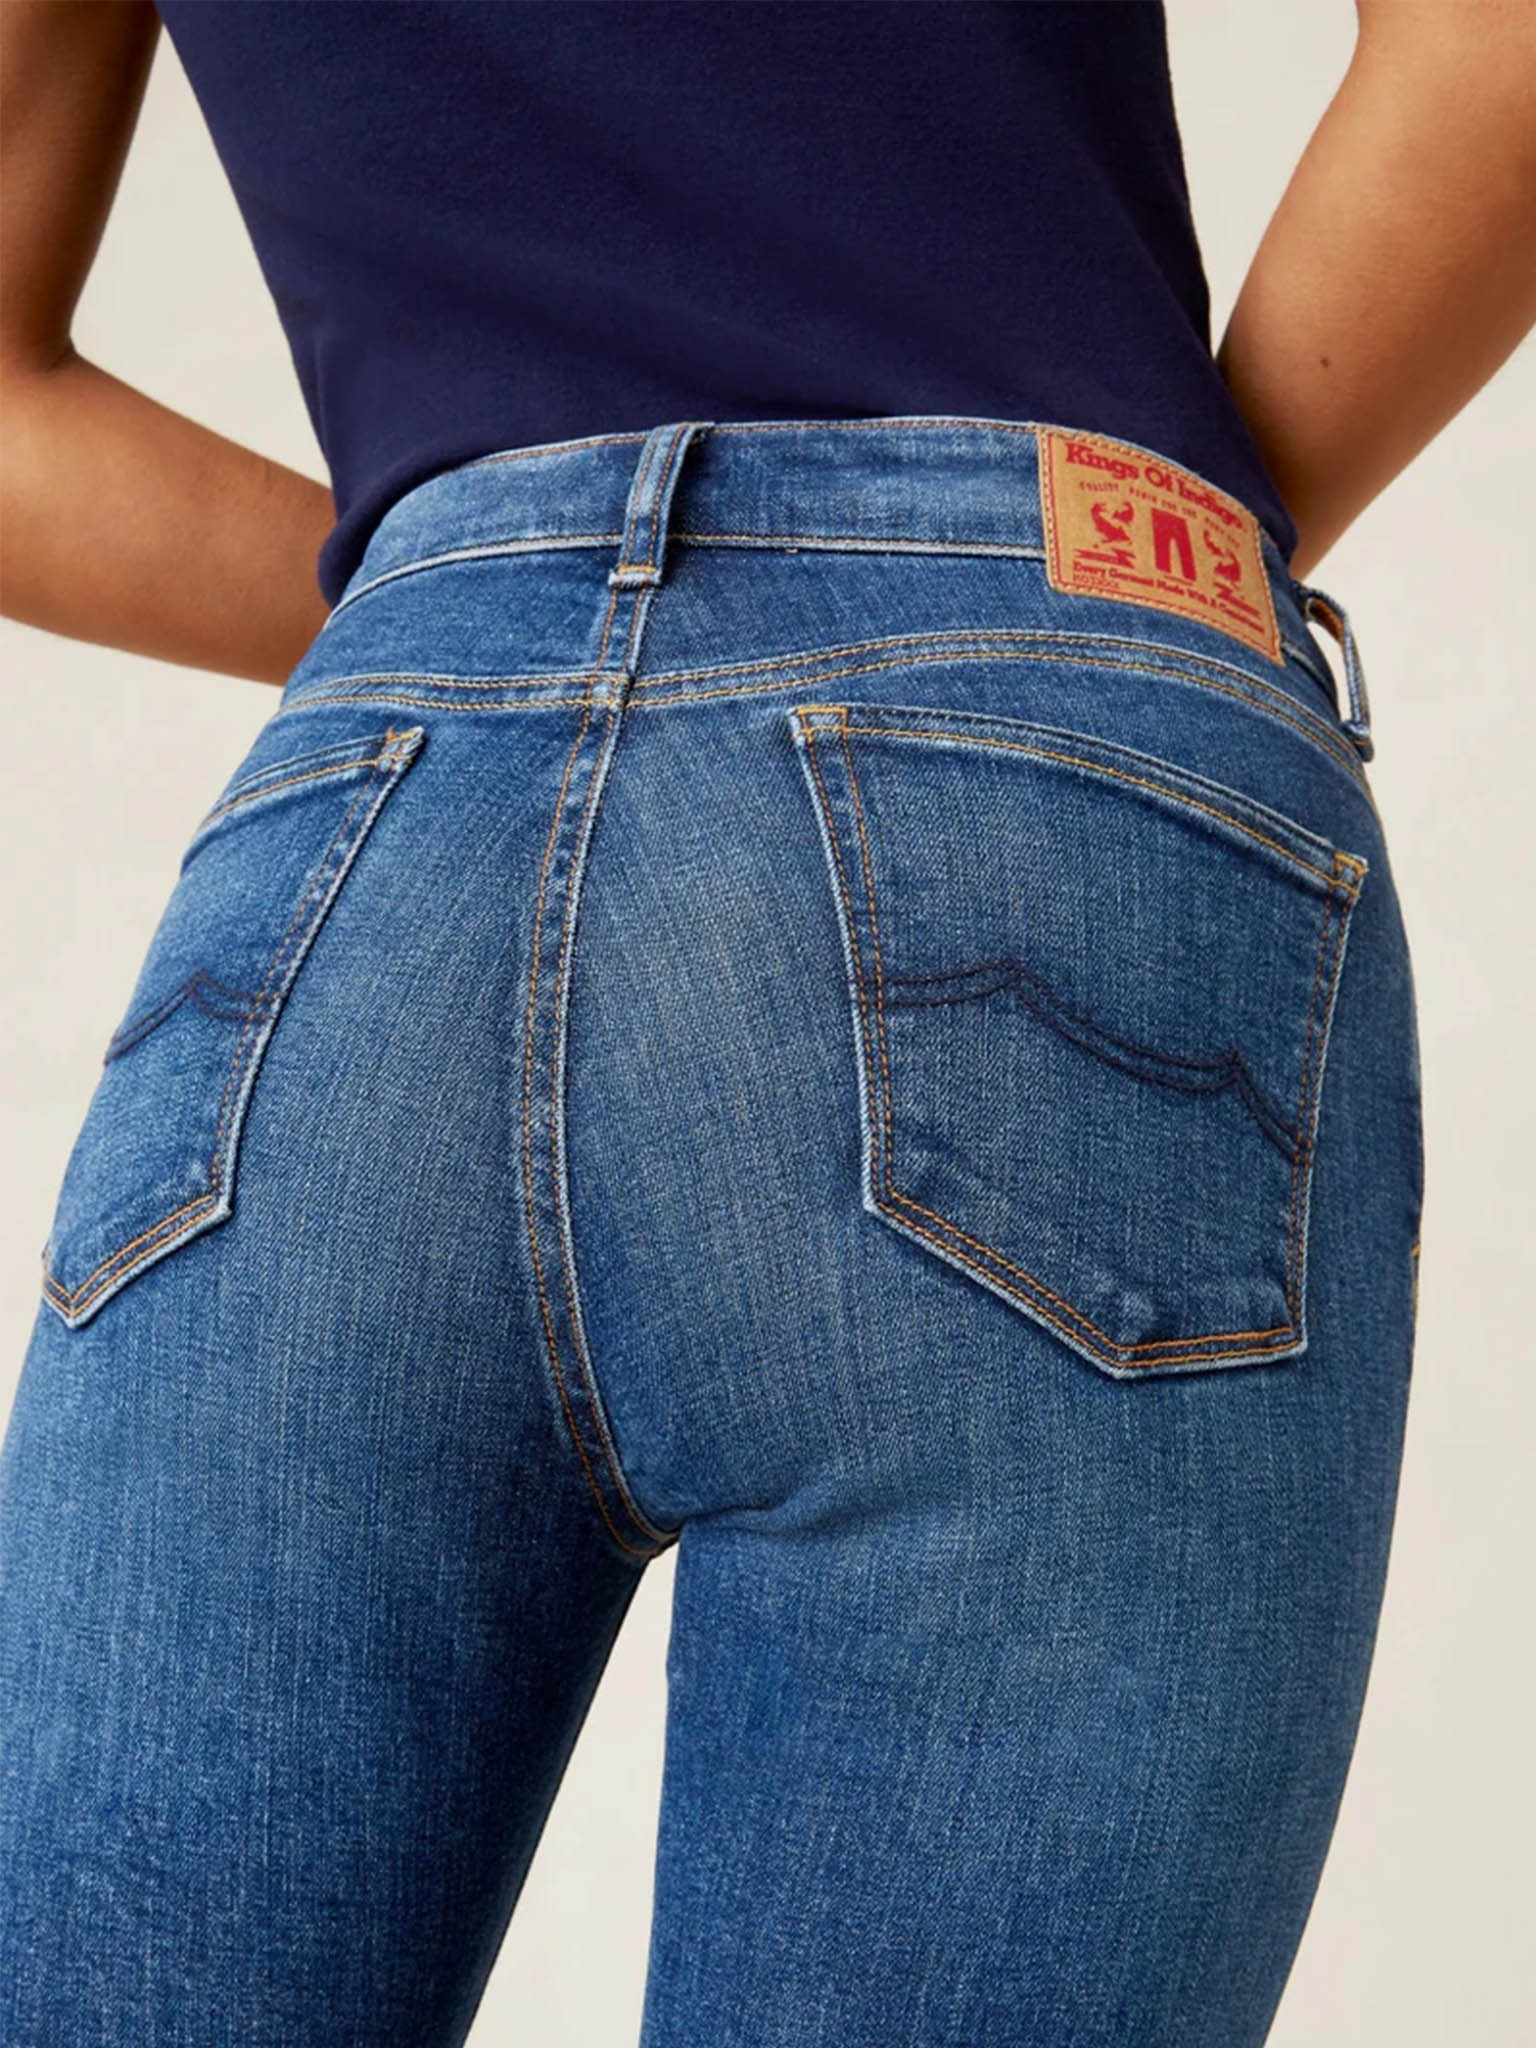 Kings of Indigo Juno Medium Rise Jeans on model closeup of bum